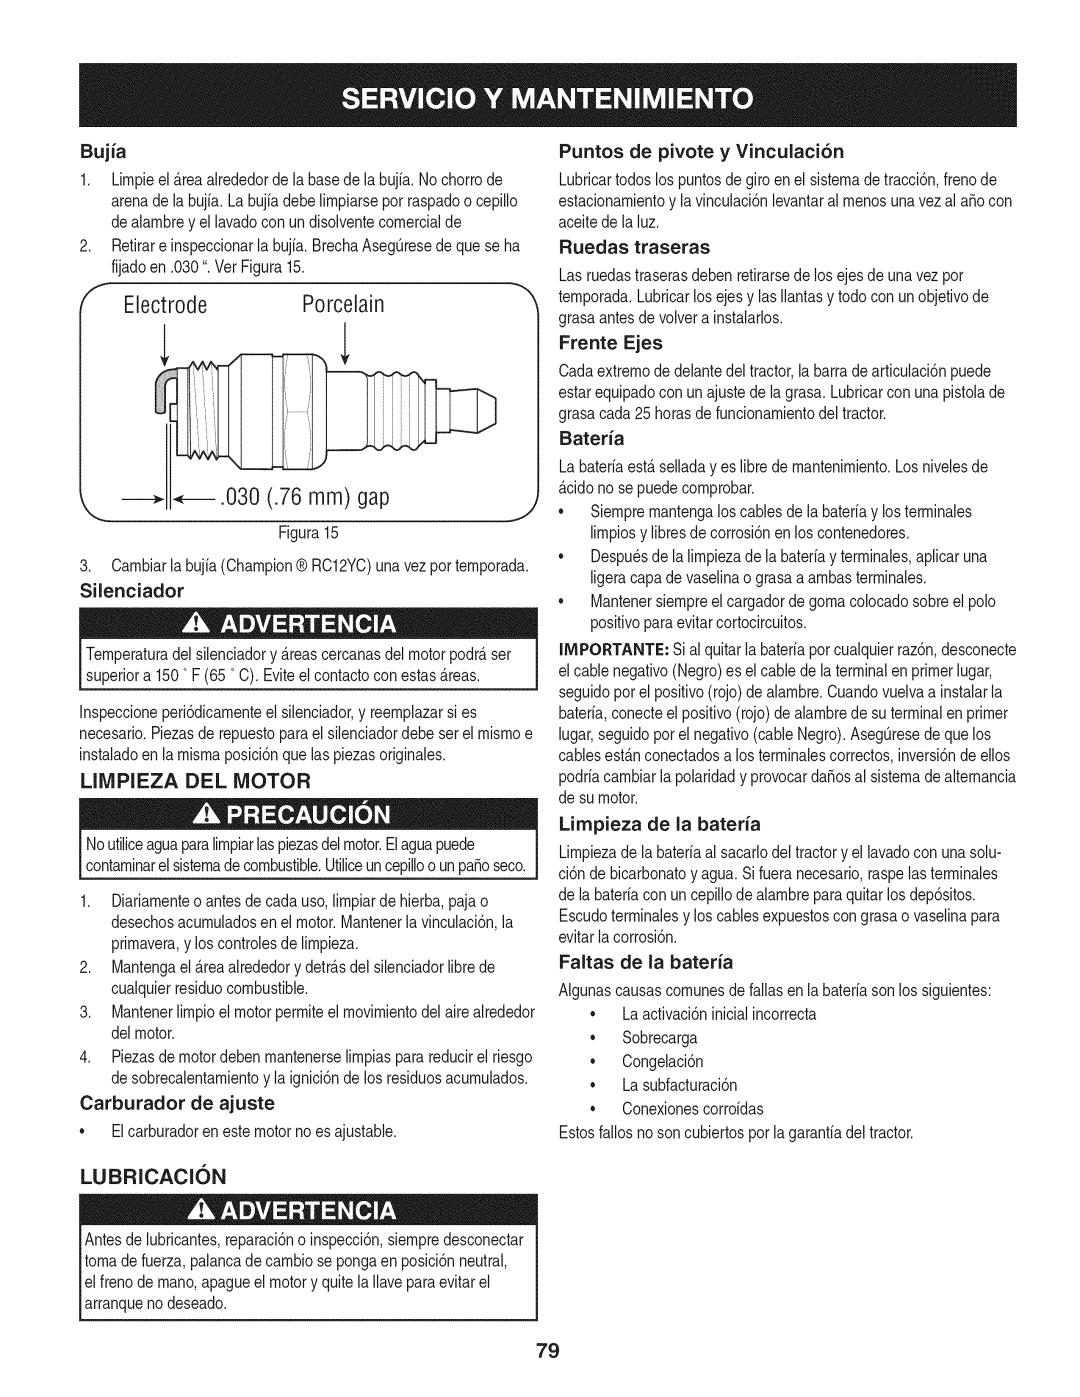 Craftsman 247.28902 manual Electrode Porcelain, Bujia, 030 .76 mm gap, Limpieza Del Motor, Lubricacion, Bateria 